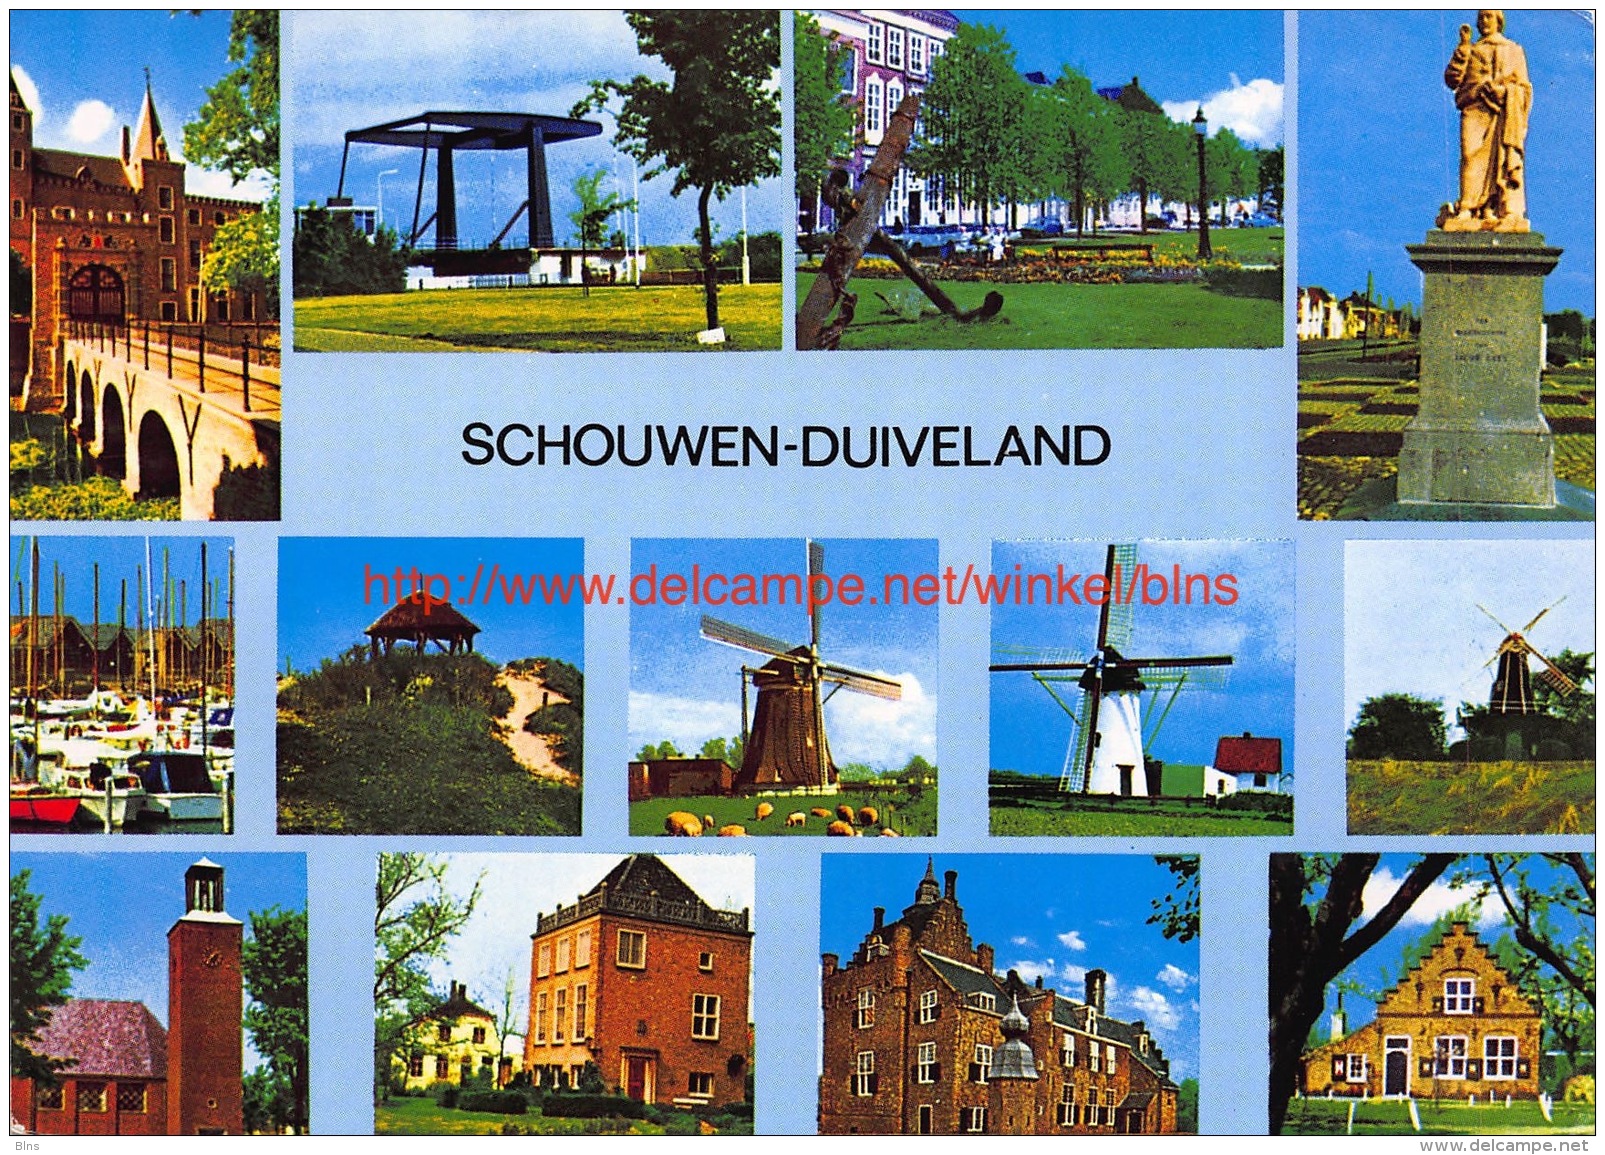 Schouwen-Duivelland - Zierikzee